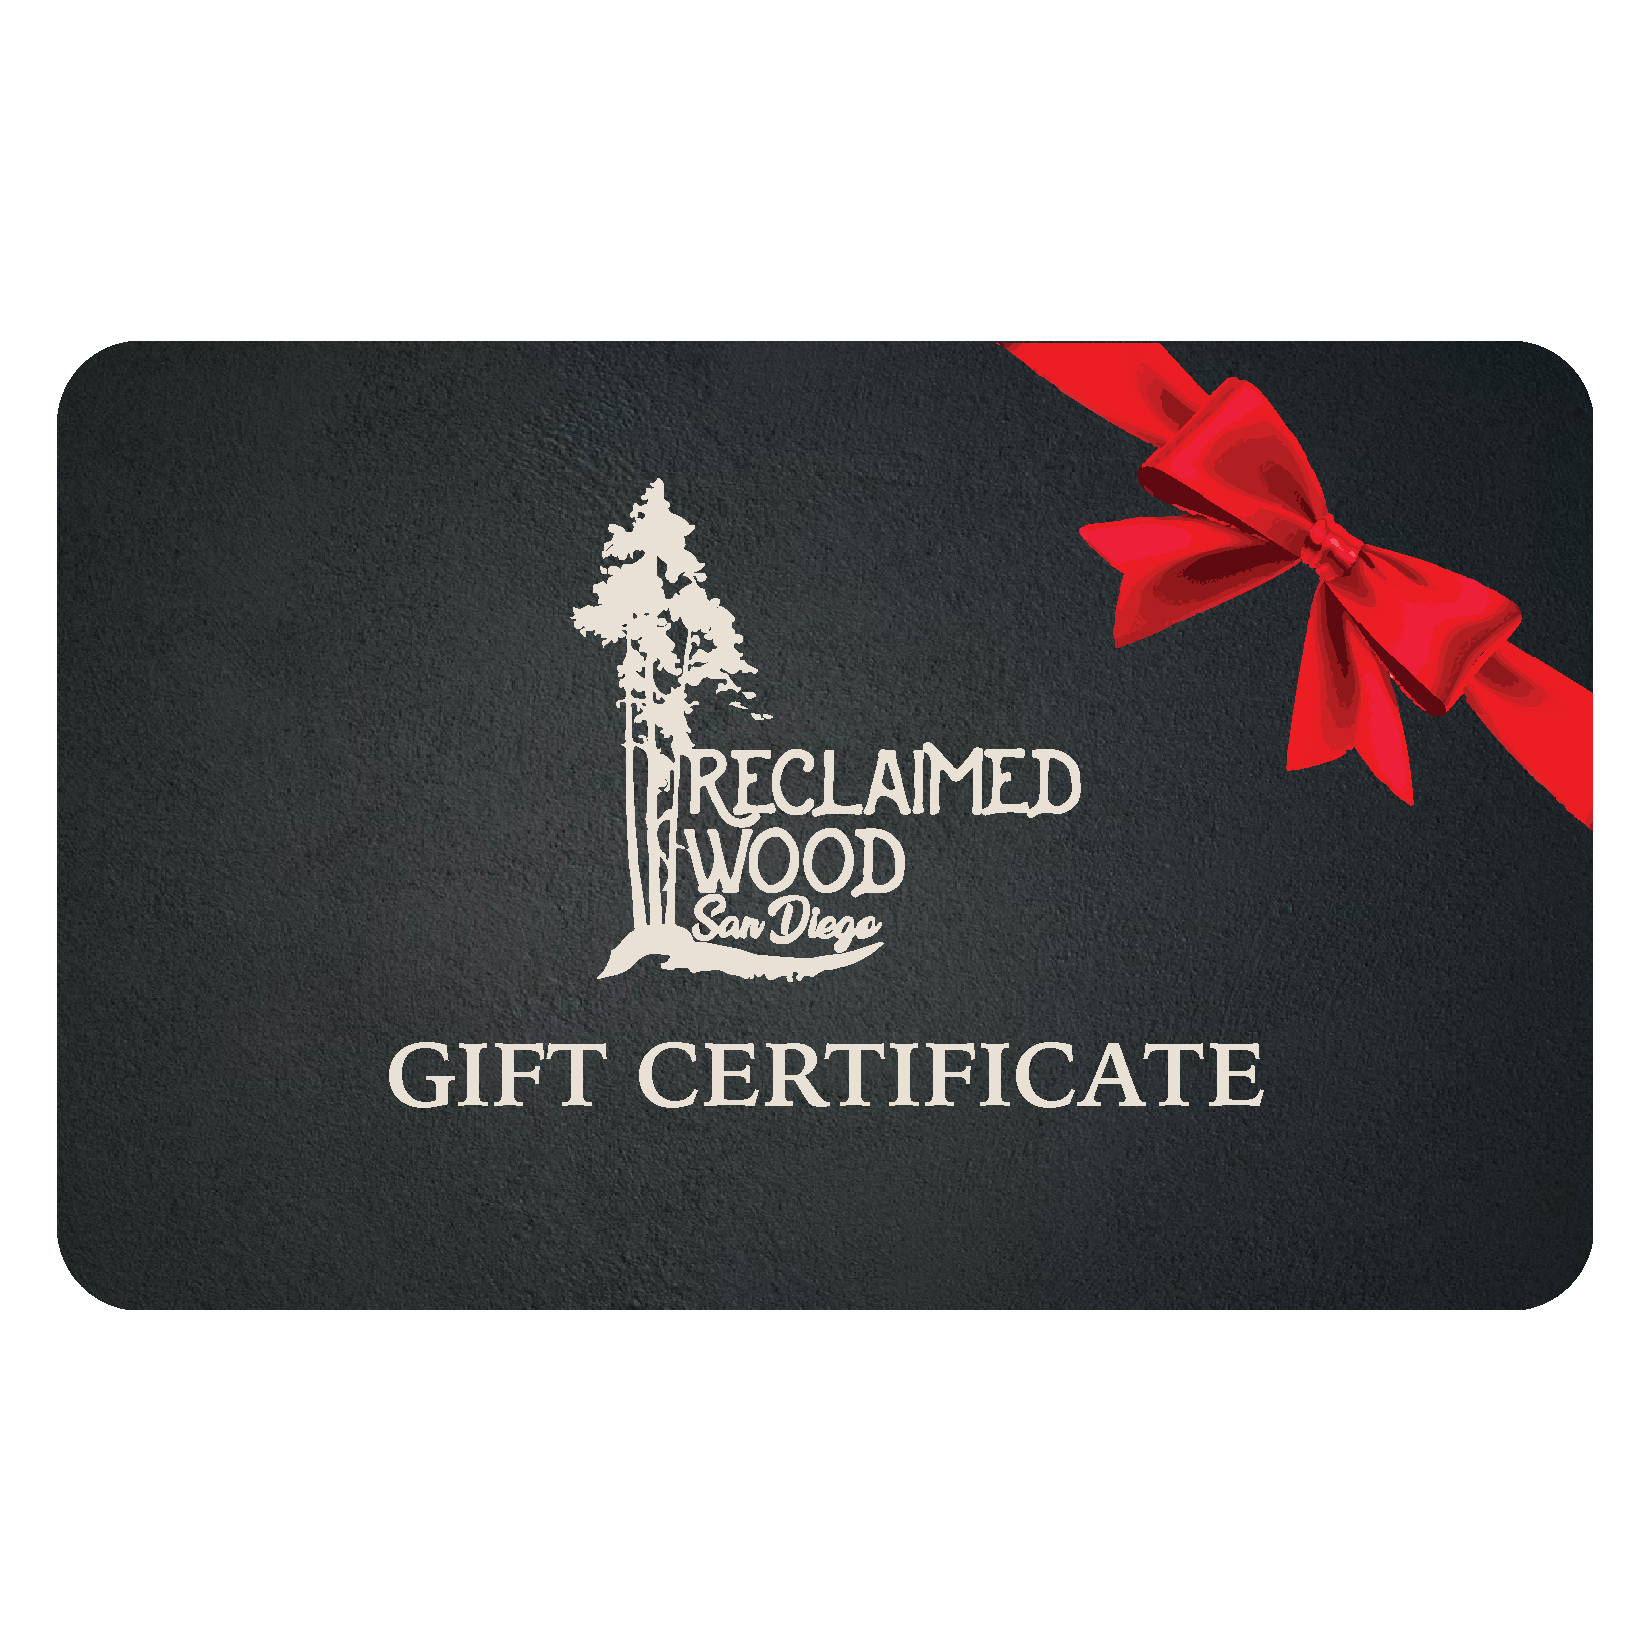 gift-certificate-reclaimed-wood-san-diego